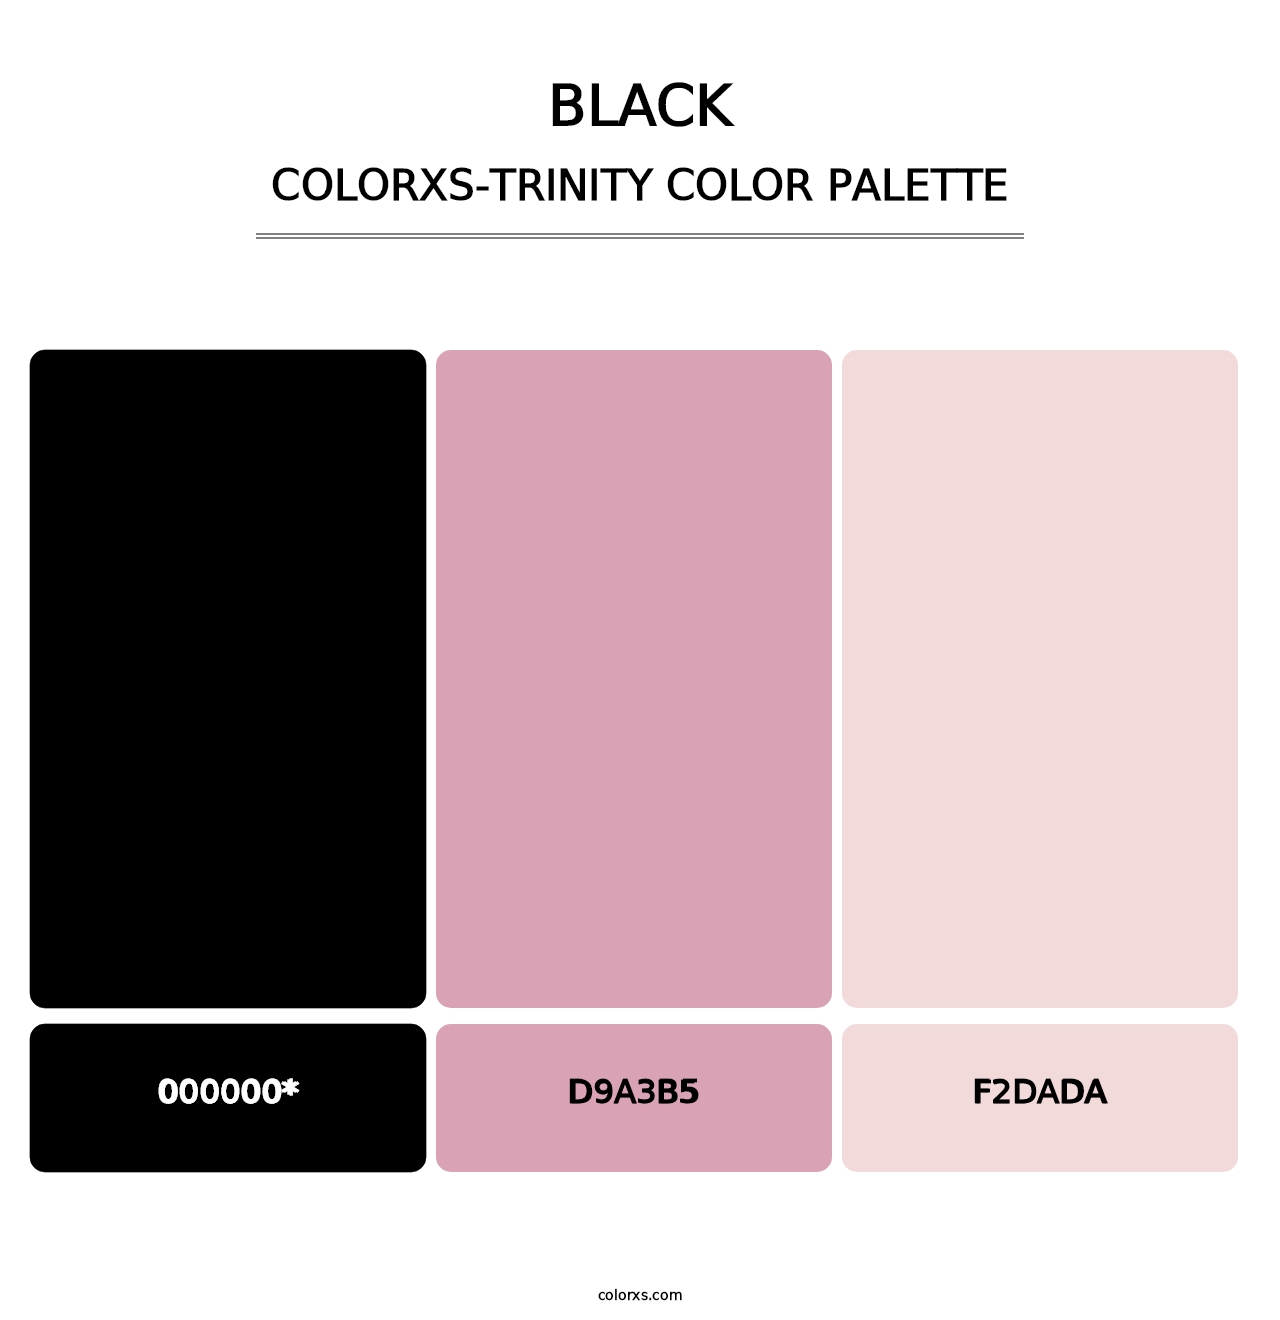 Black - Colorxs Trinity Palette